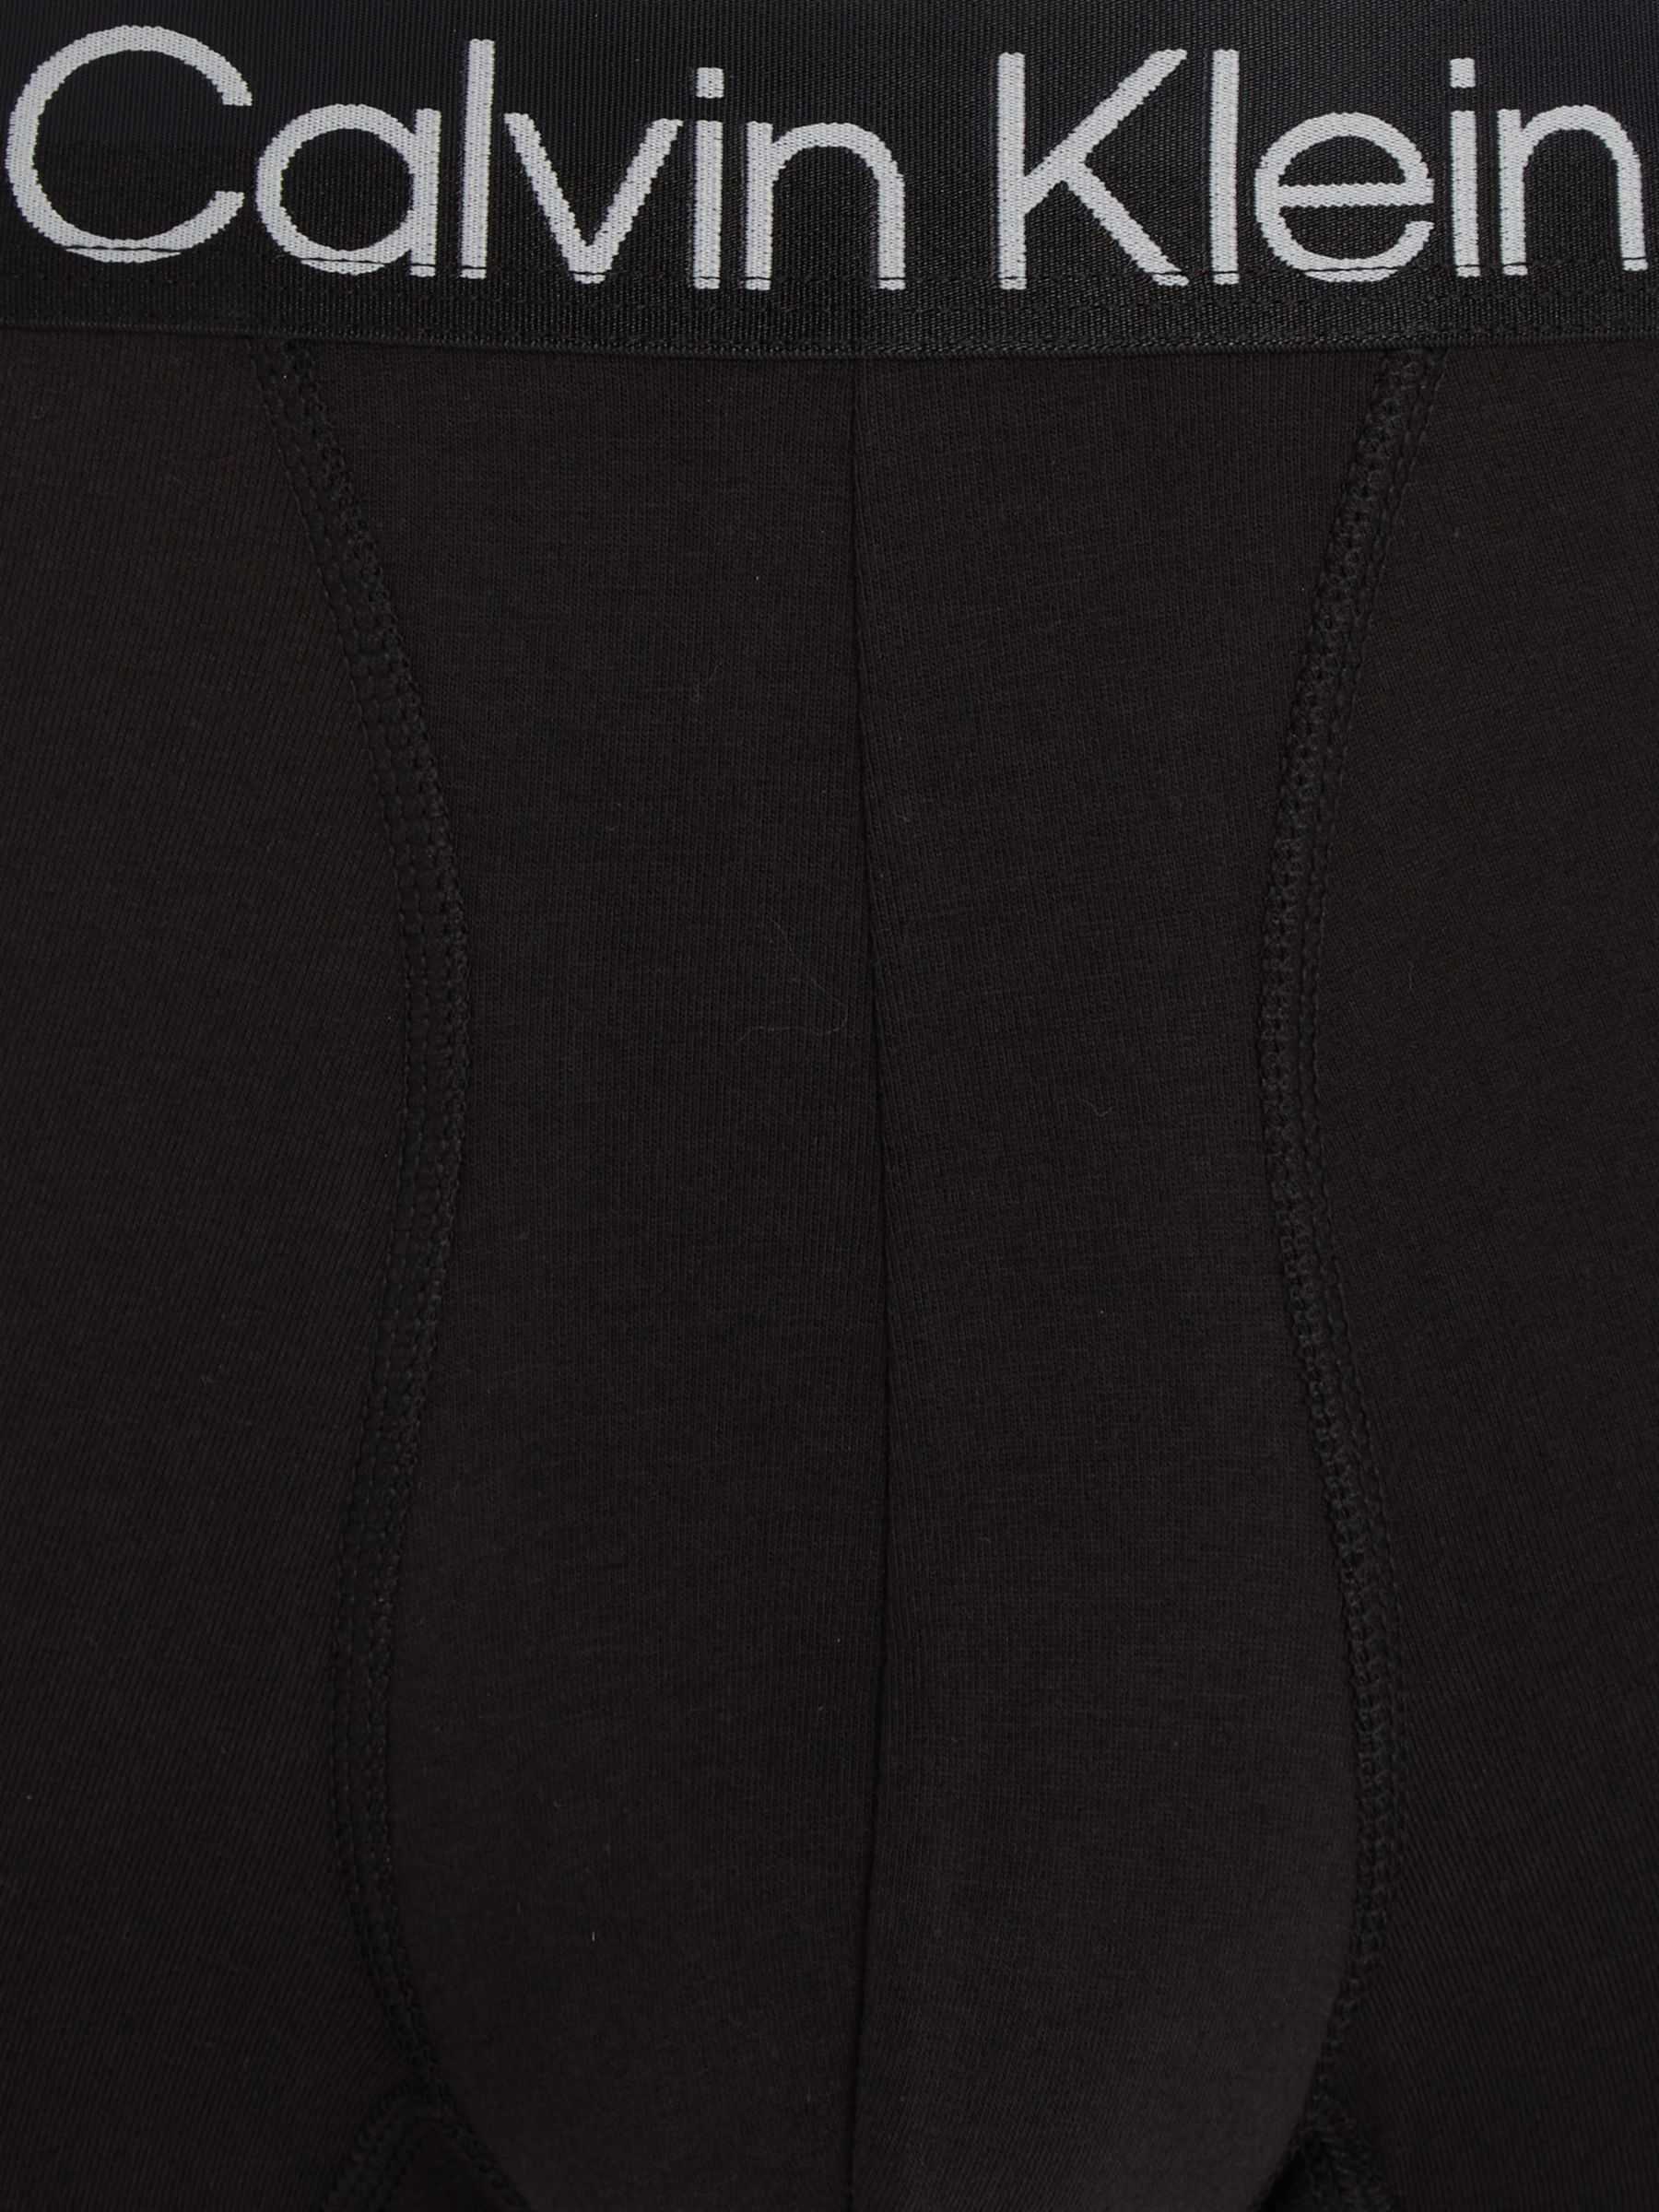 Buy Calvin Klein Stretch Cotton Trunks, Pack of 3, Black Online at johnlewis.com